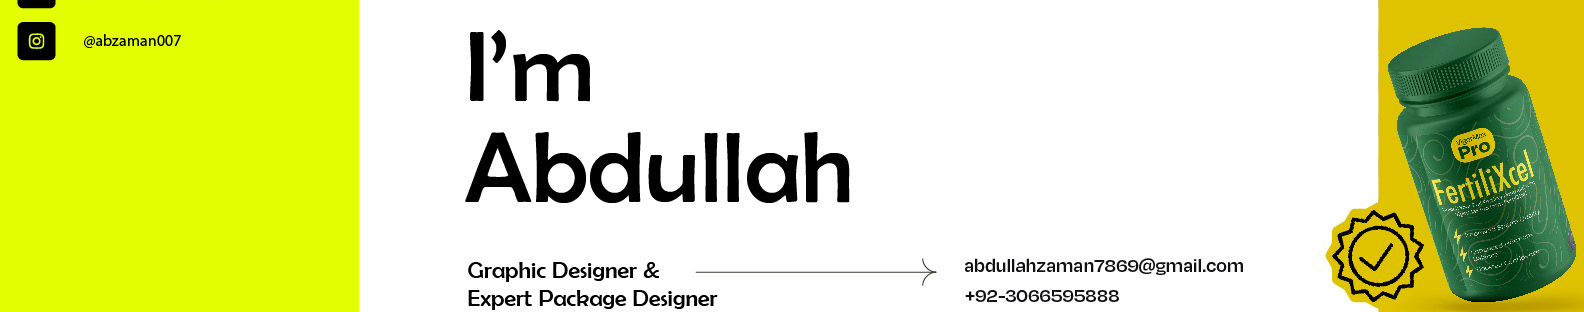 Muhammad Abdullah's profile banner